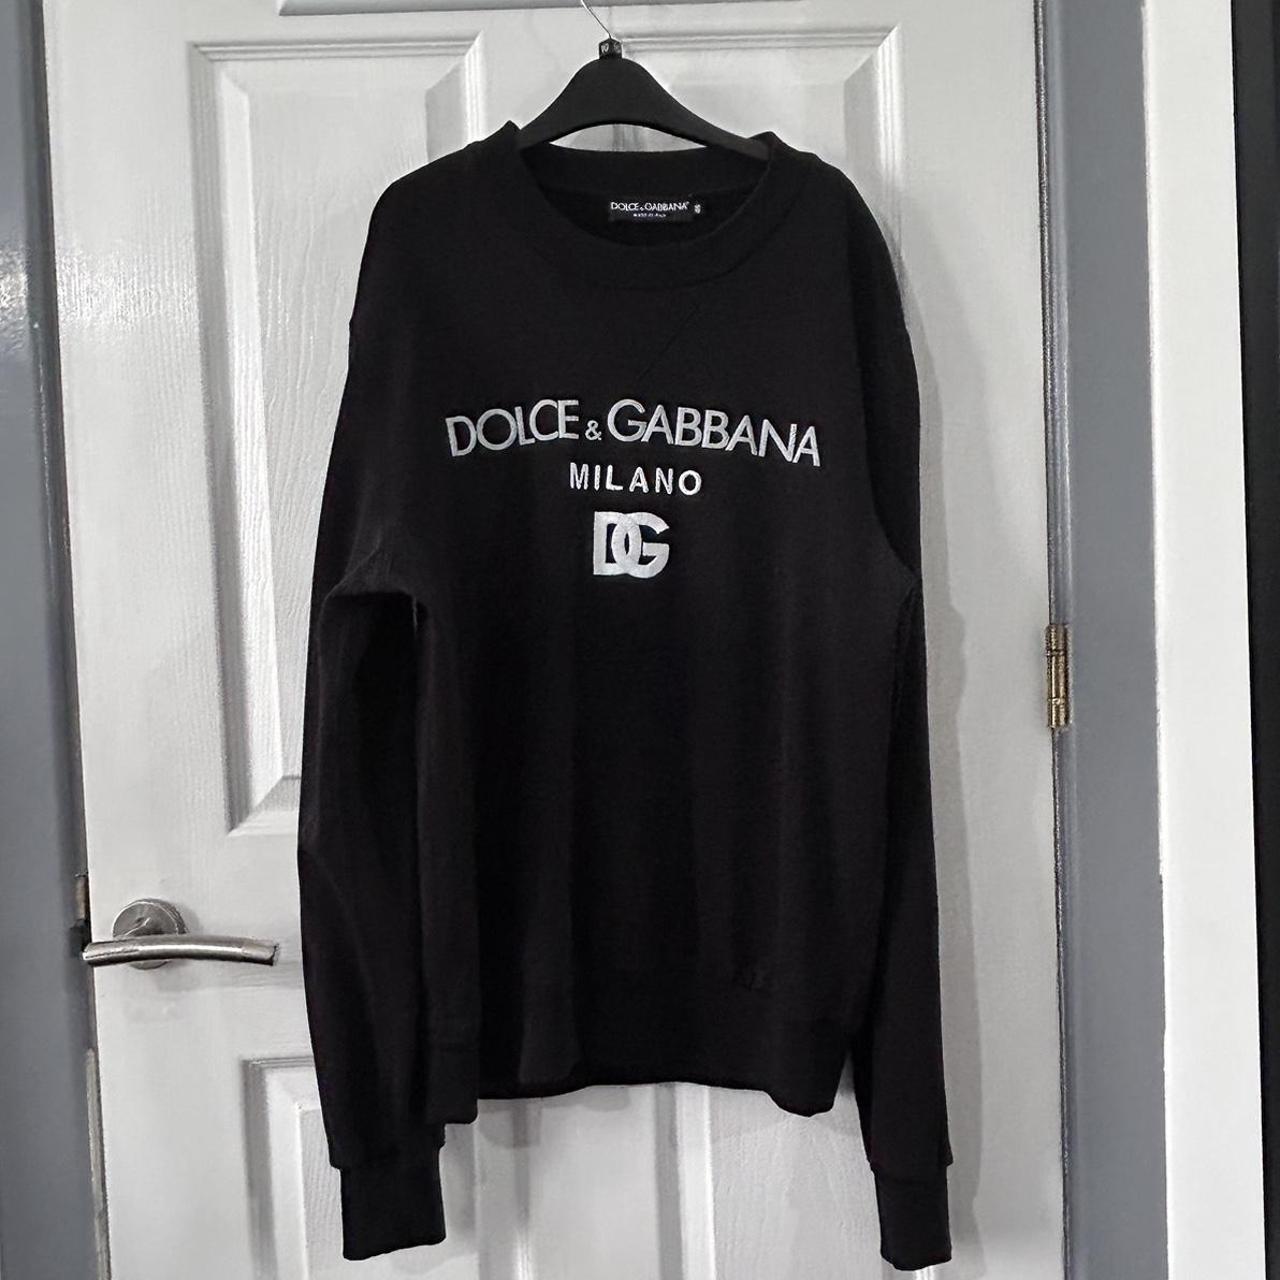 Dolce & Gabbana Men's Black and White Jumper | Depop